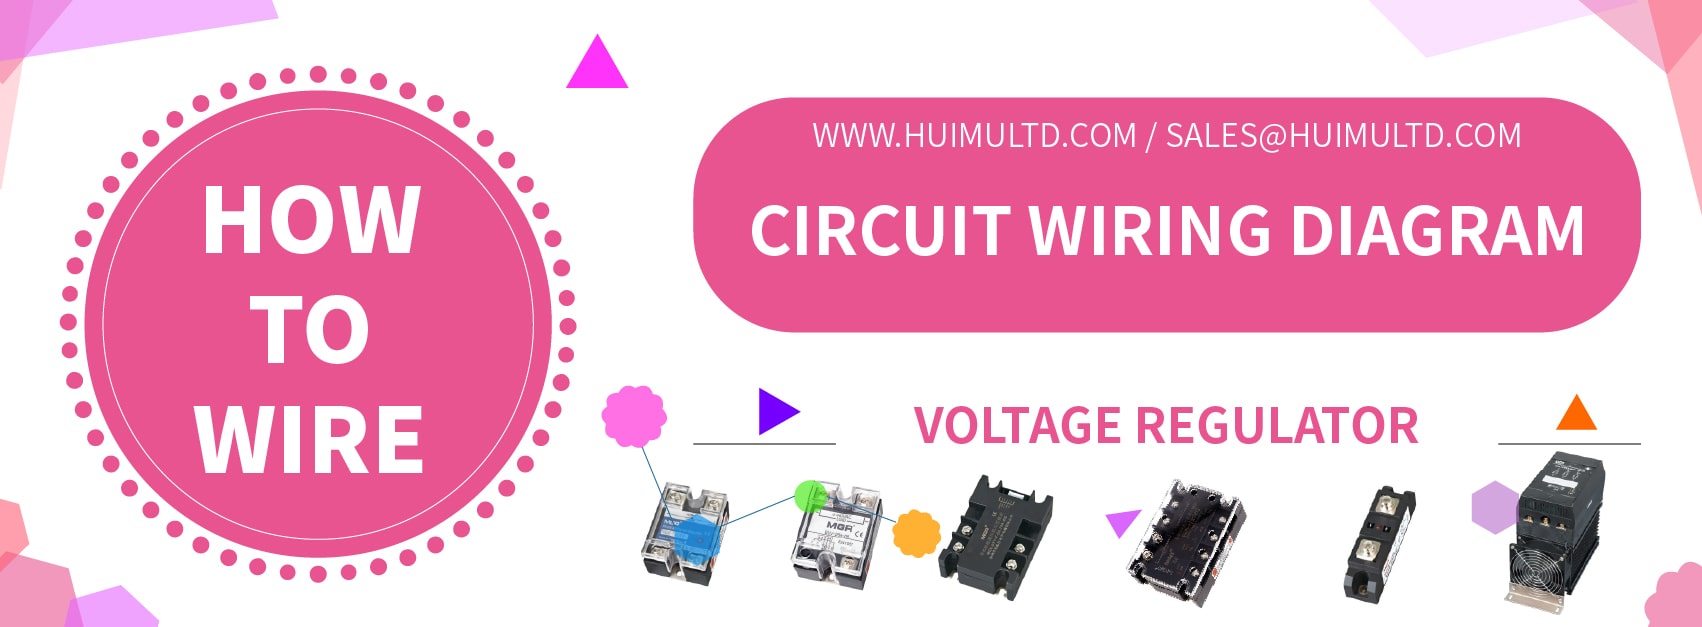 How to wire voltage regulator? banner